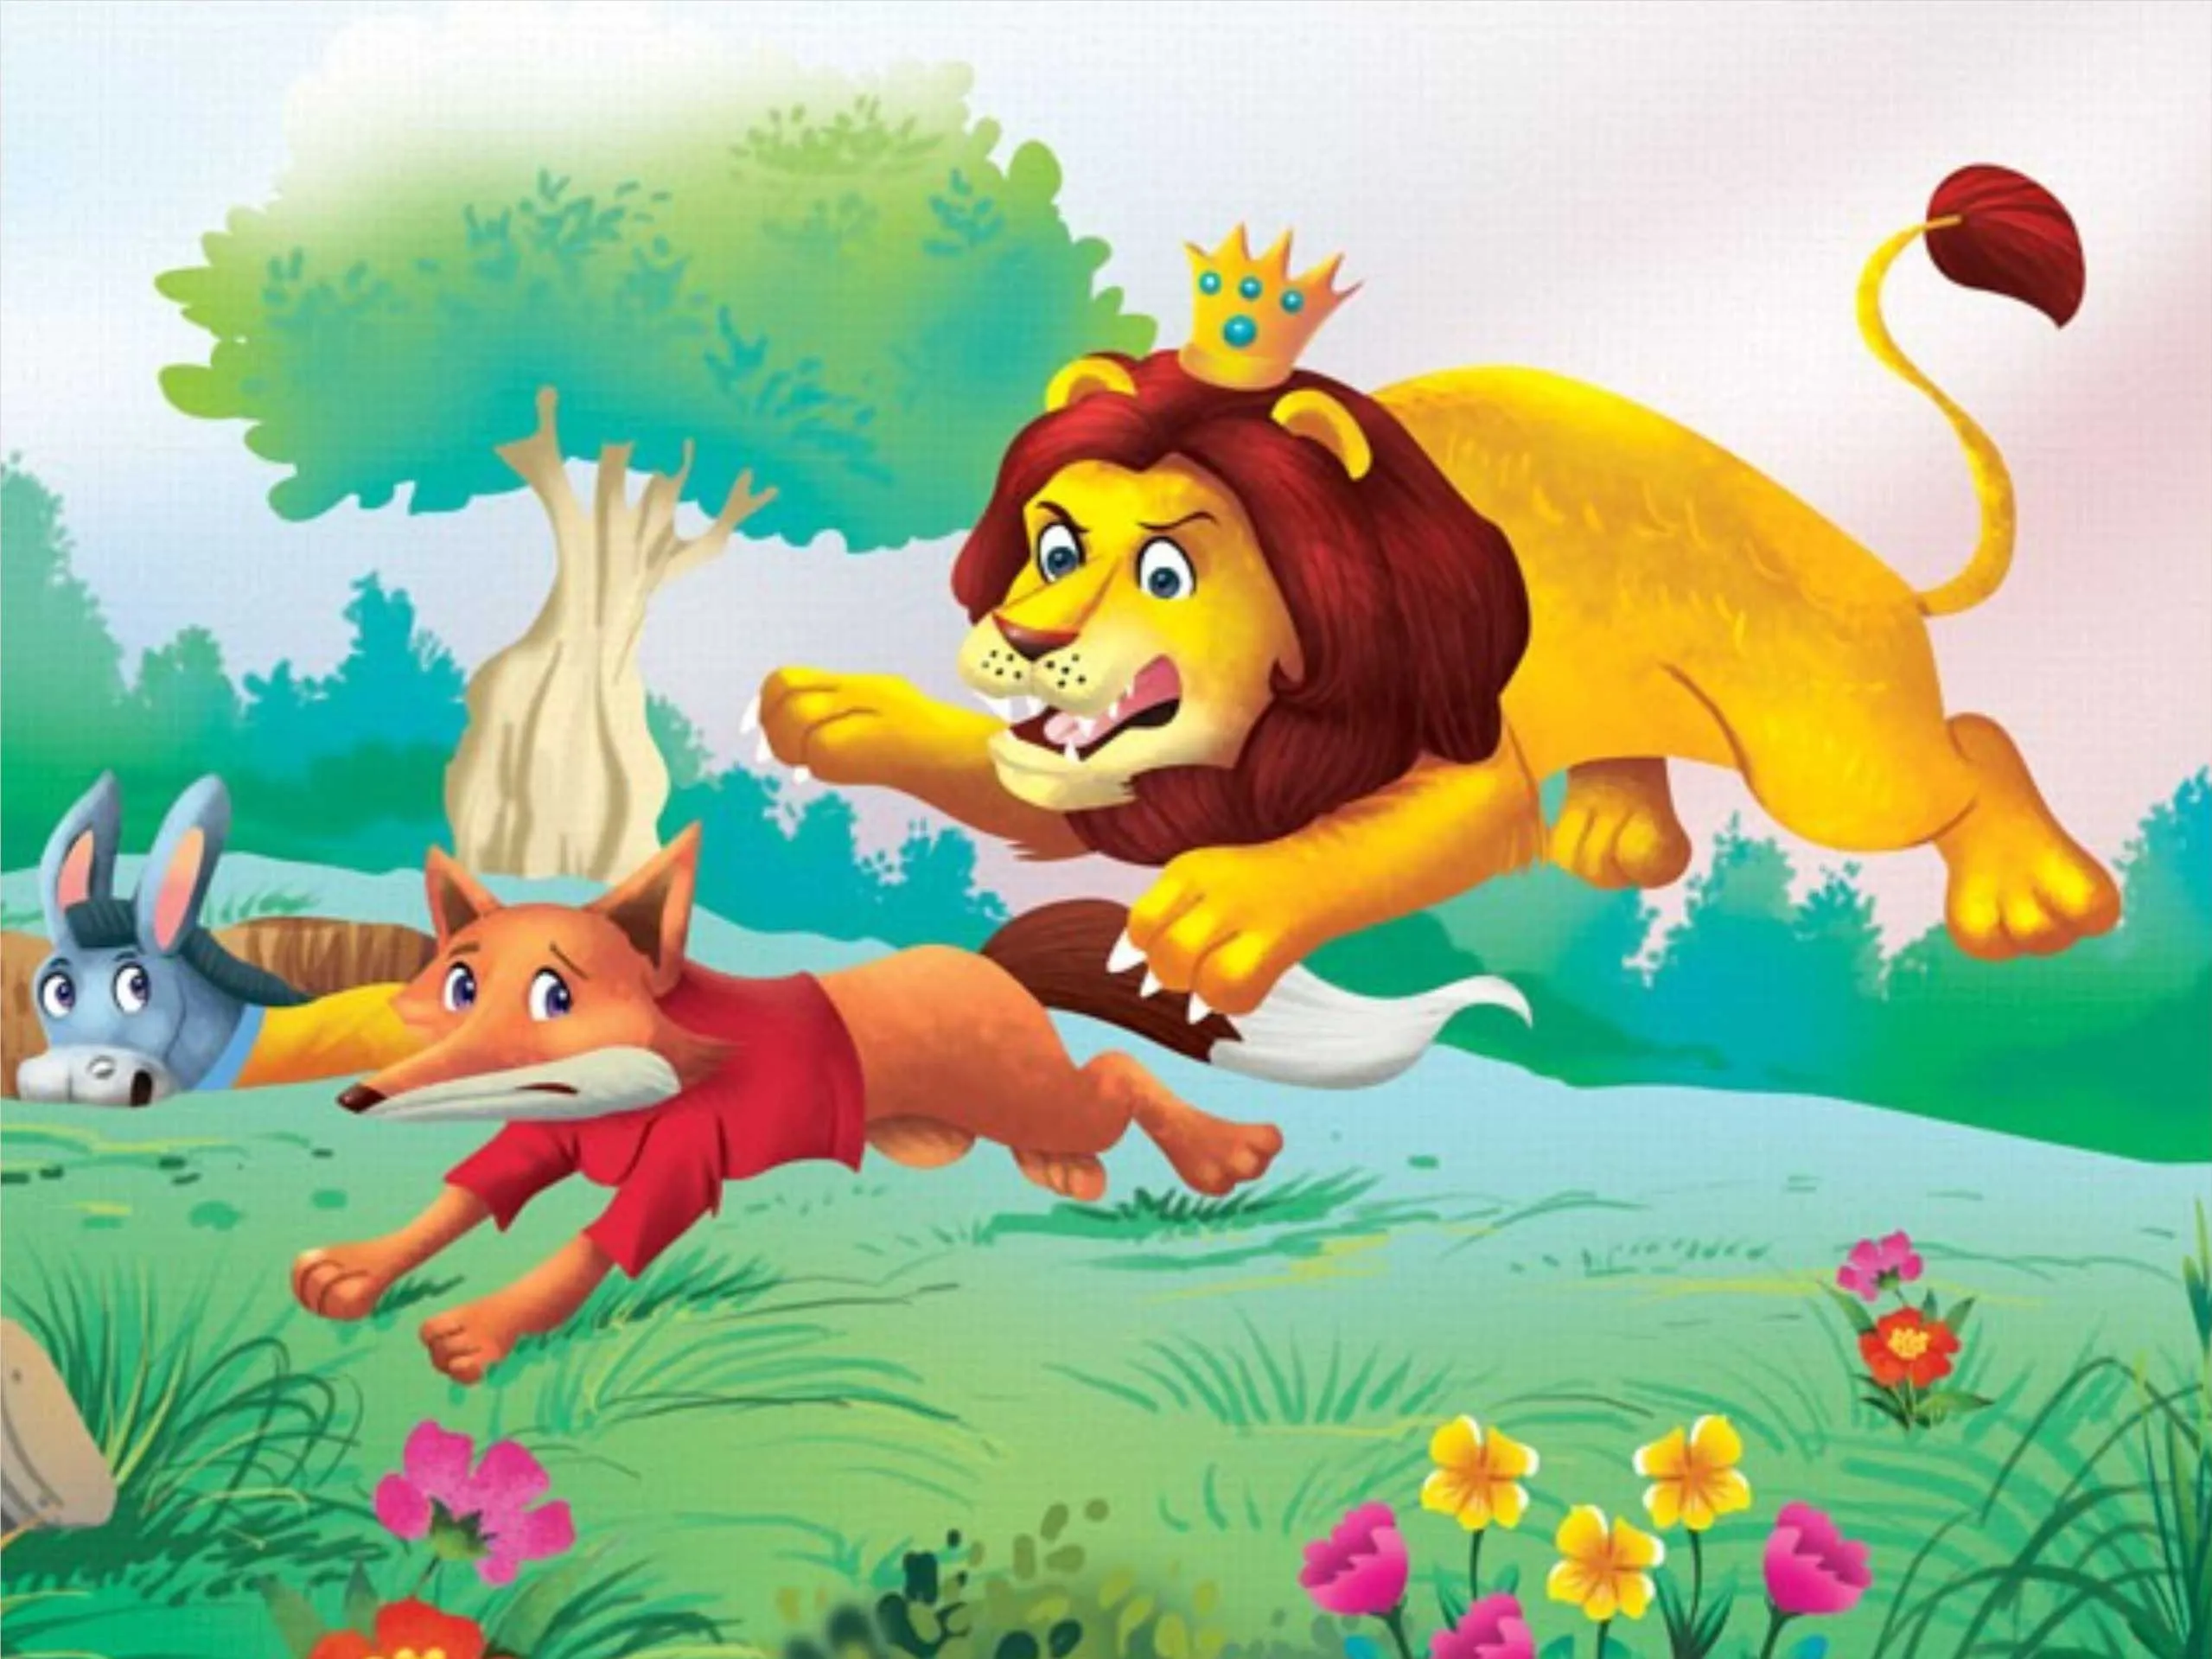 Fox and Lion cartoon image